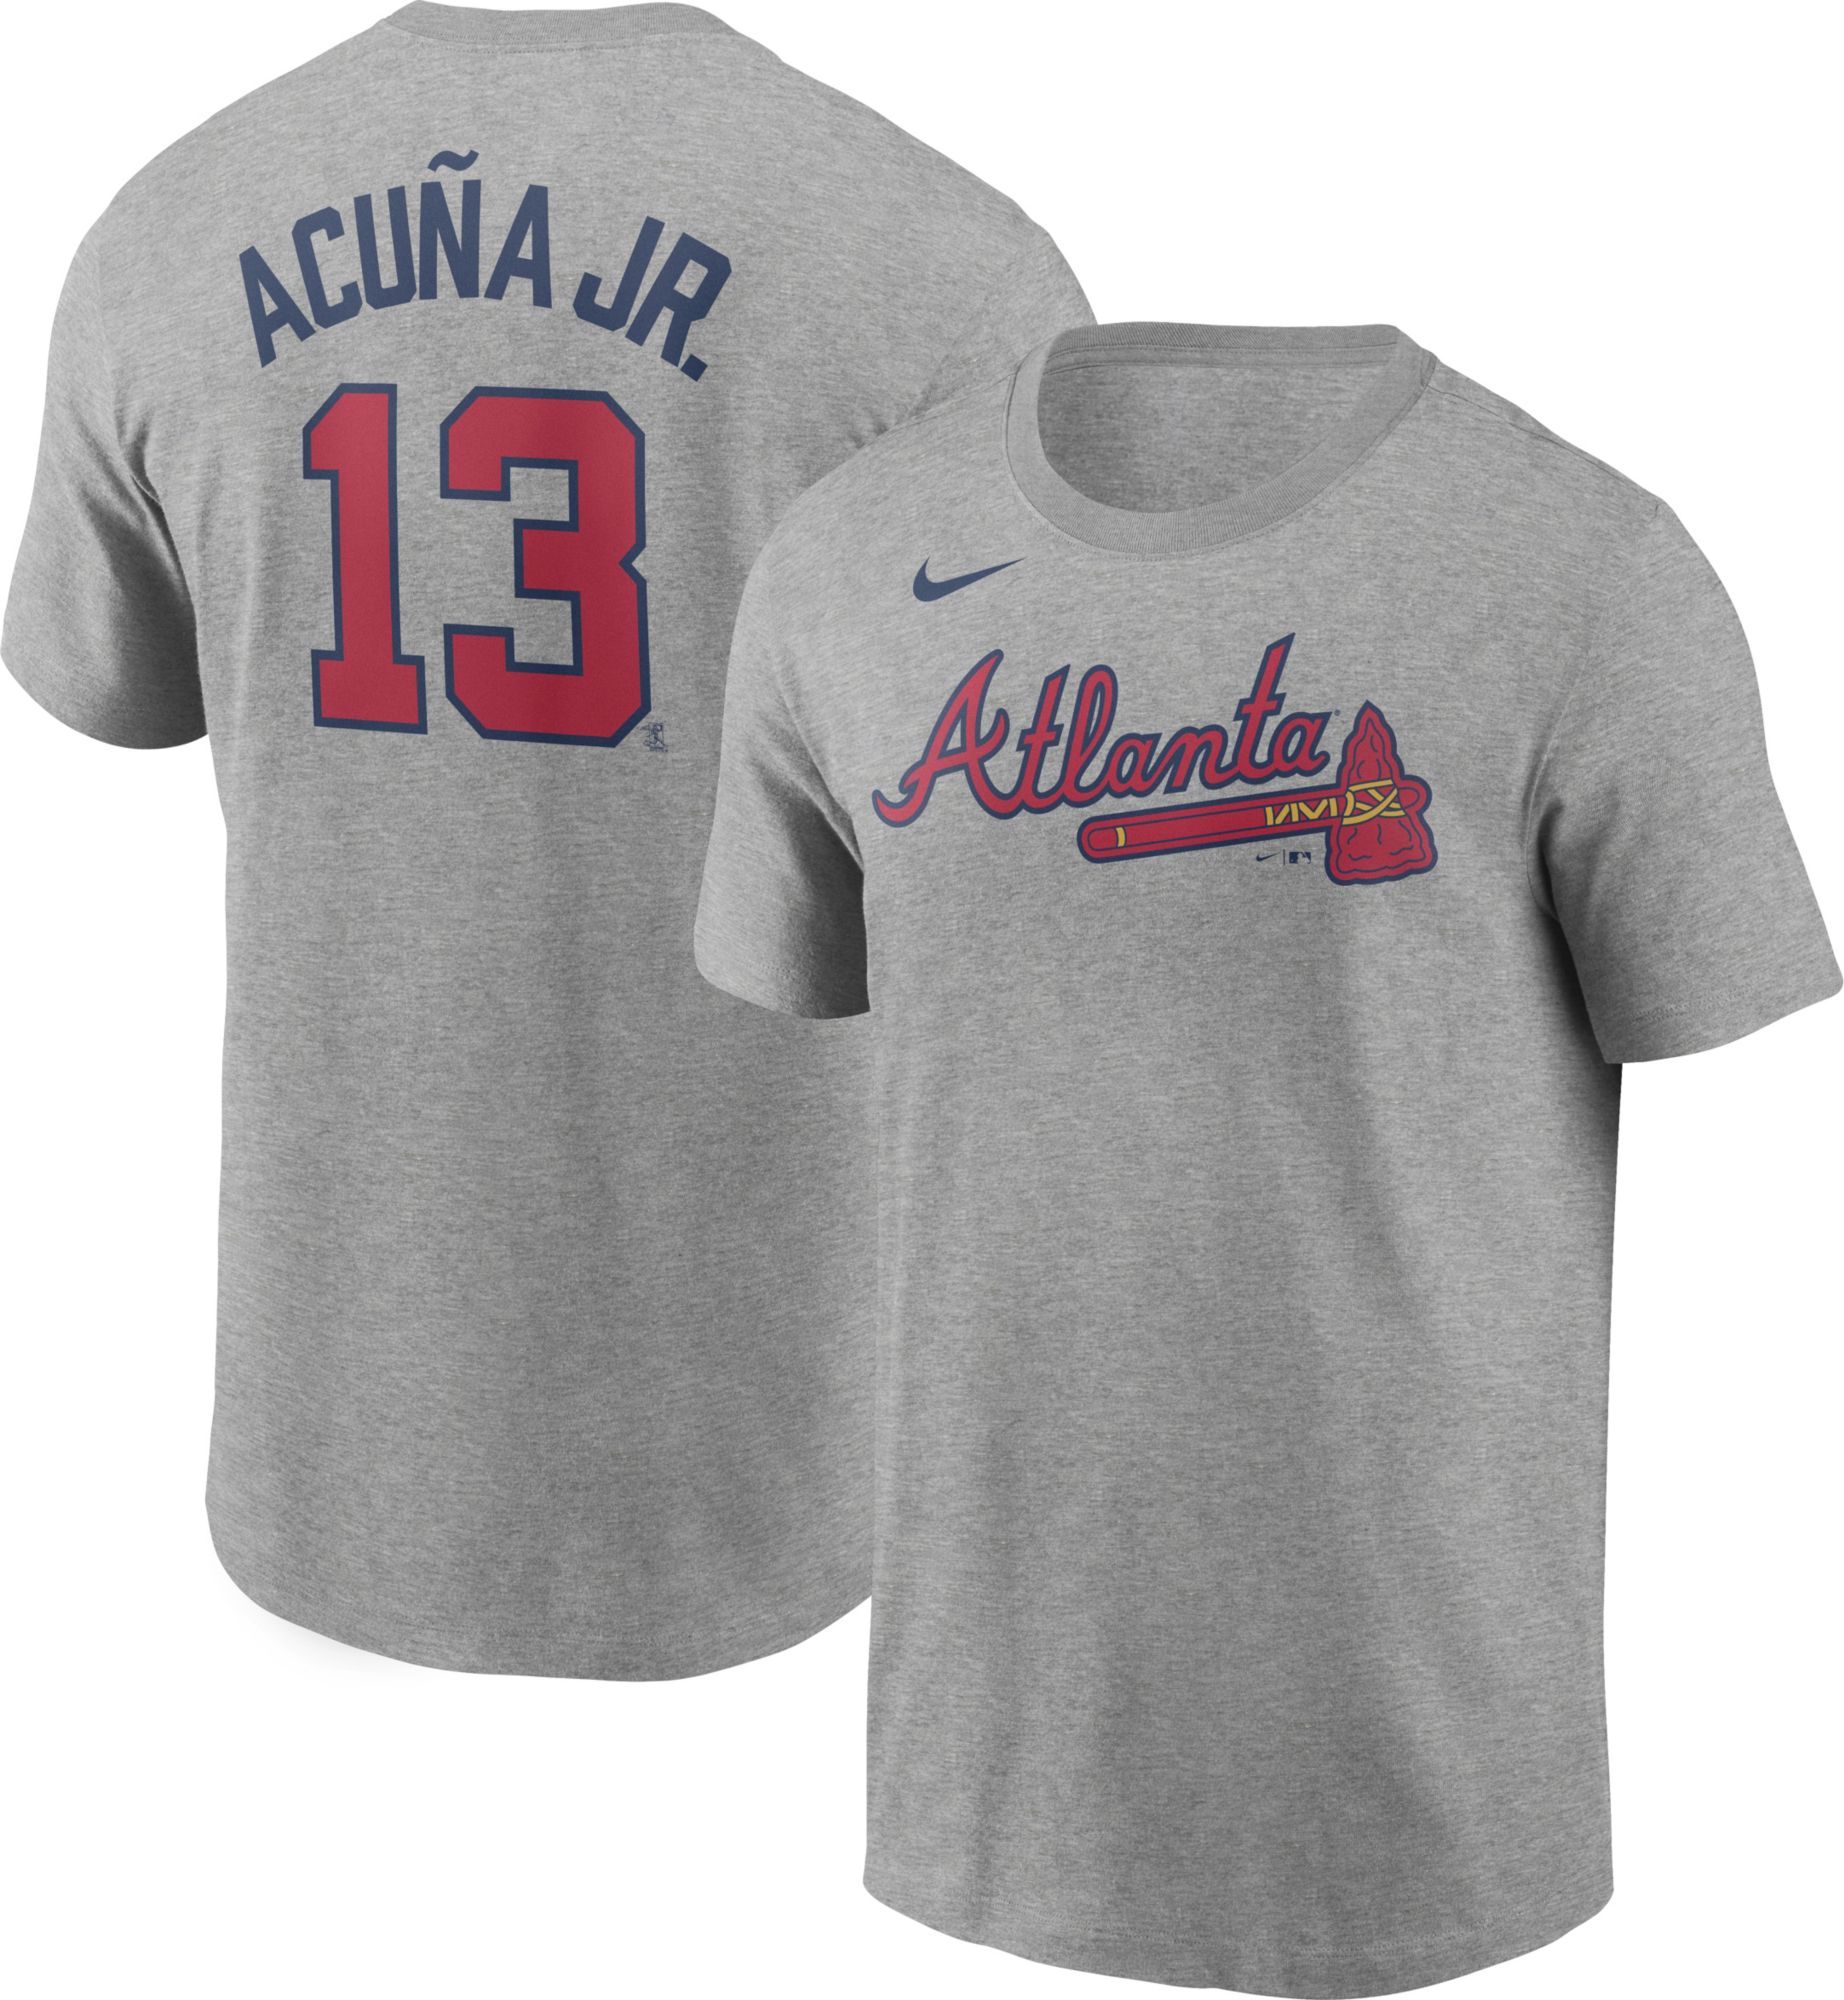 Nike MLB Atlanta Braves City Connect (Ronald Acuña Jr.) Men's Authentic  Baseball Jersey. Nike.com